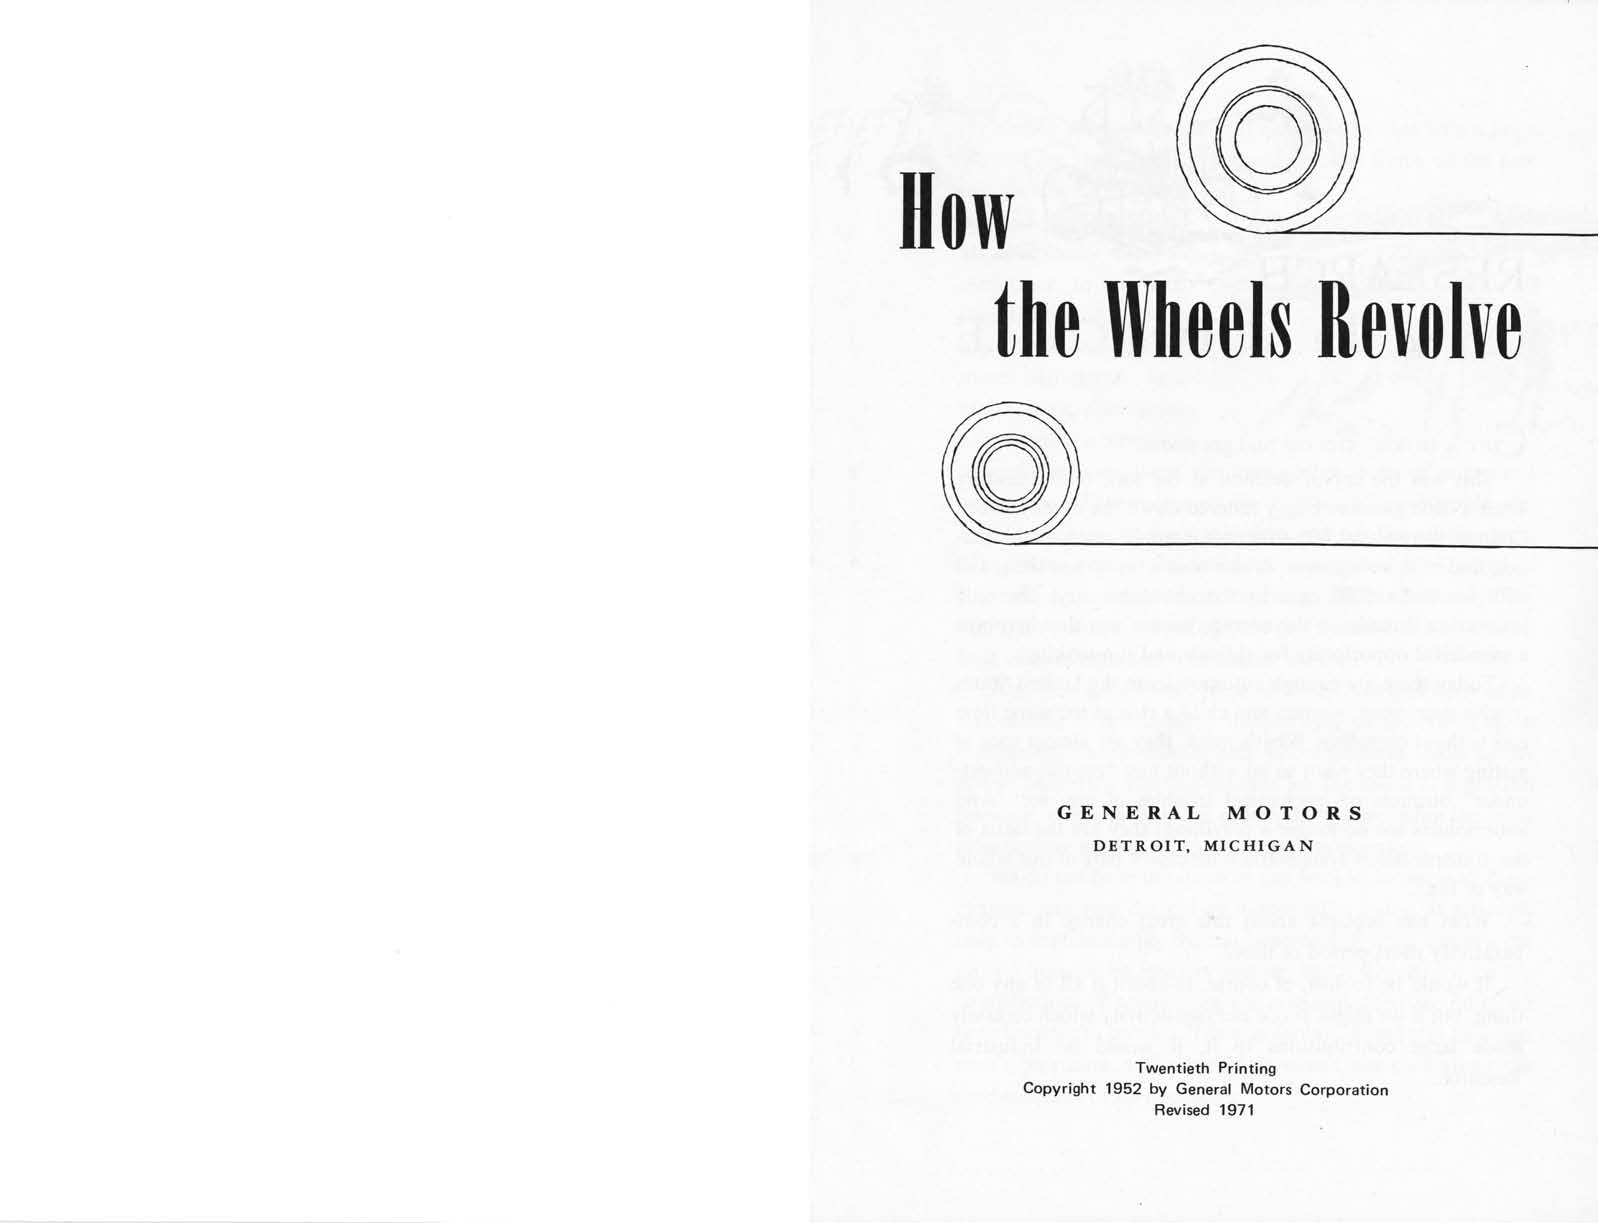 n_1953-How The Wheels Revolve-01.jpg